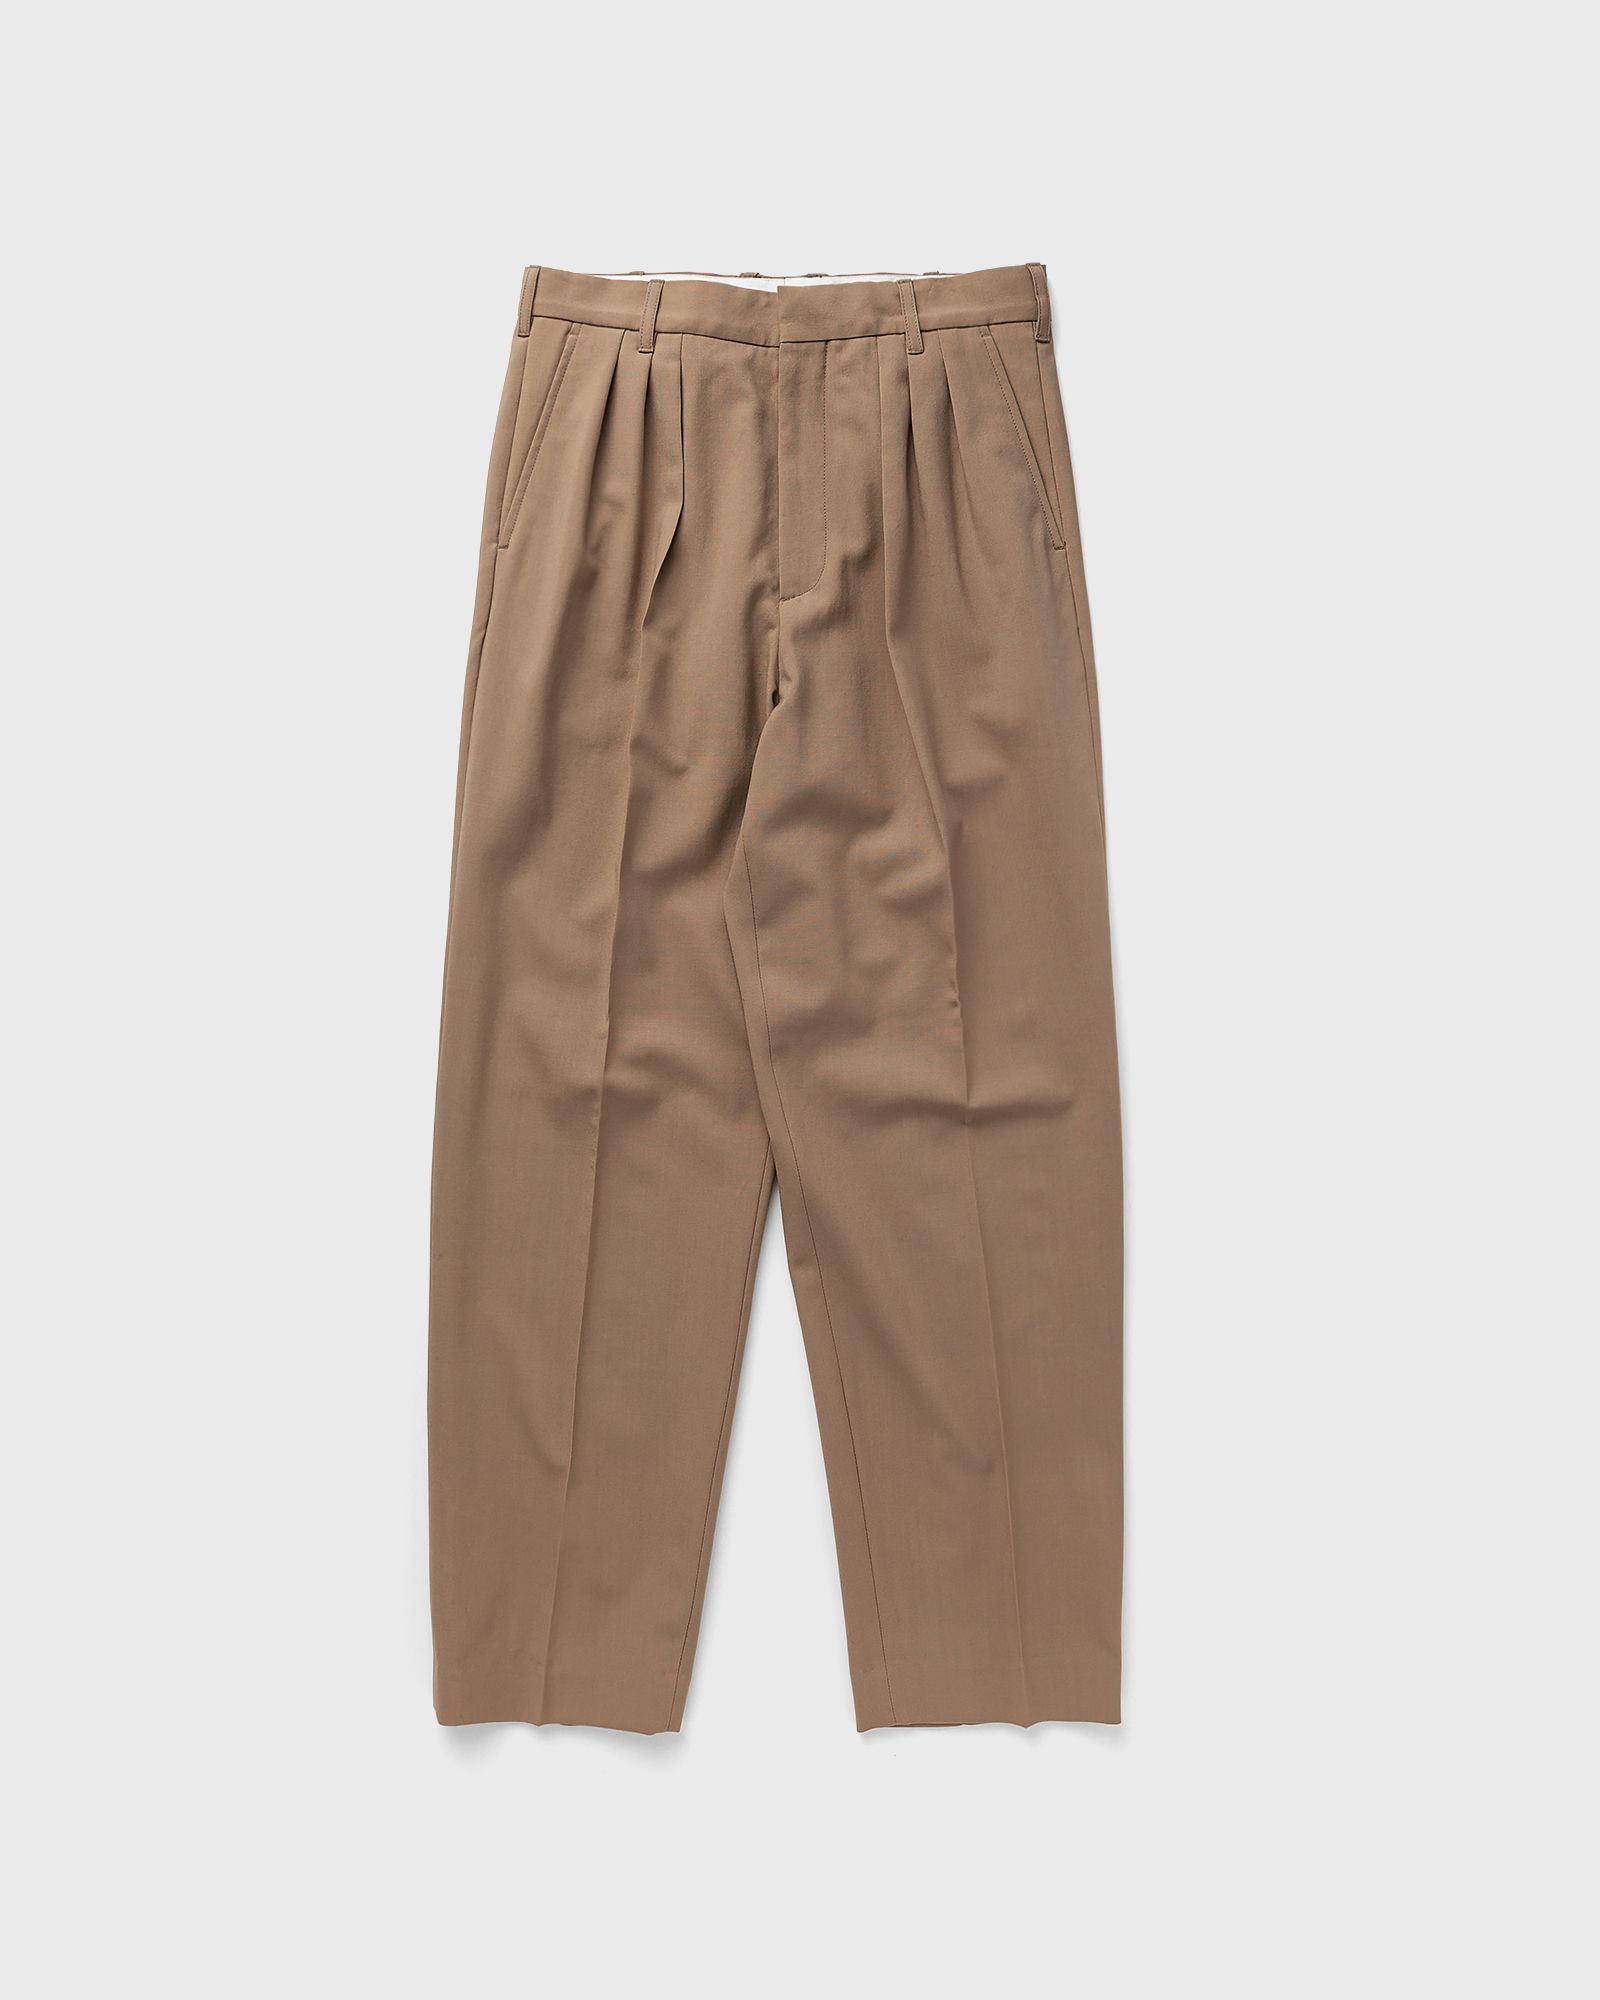 Kenzo - tailored pant men casual pants brown in größe:xs